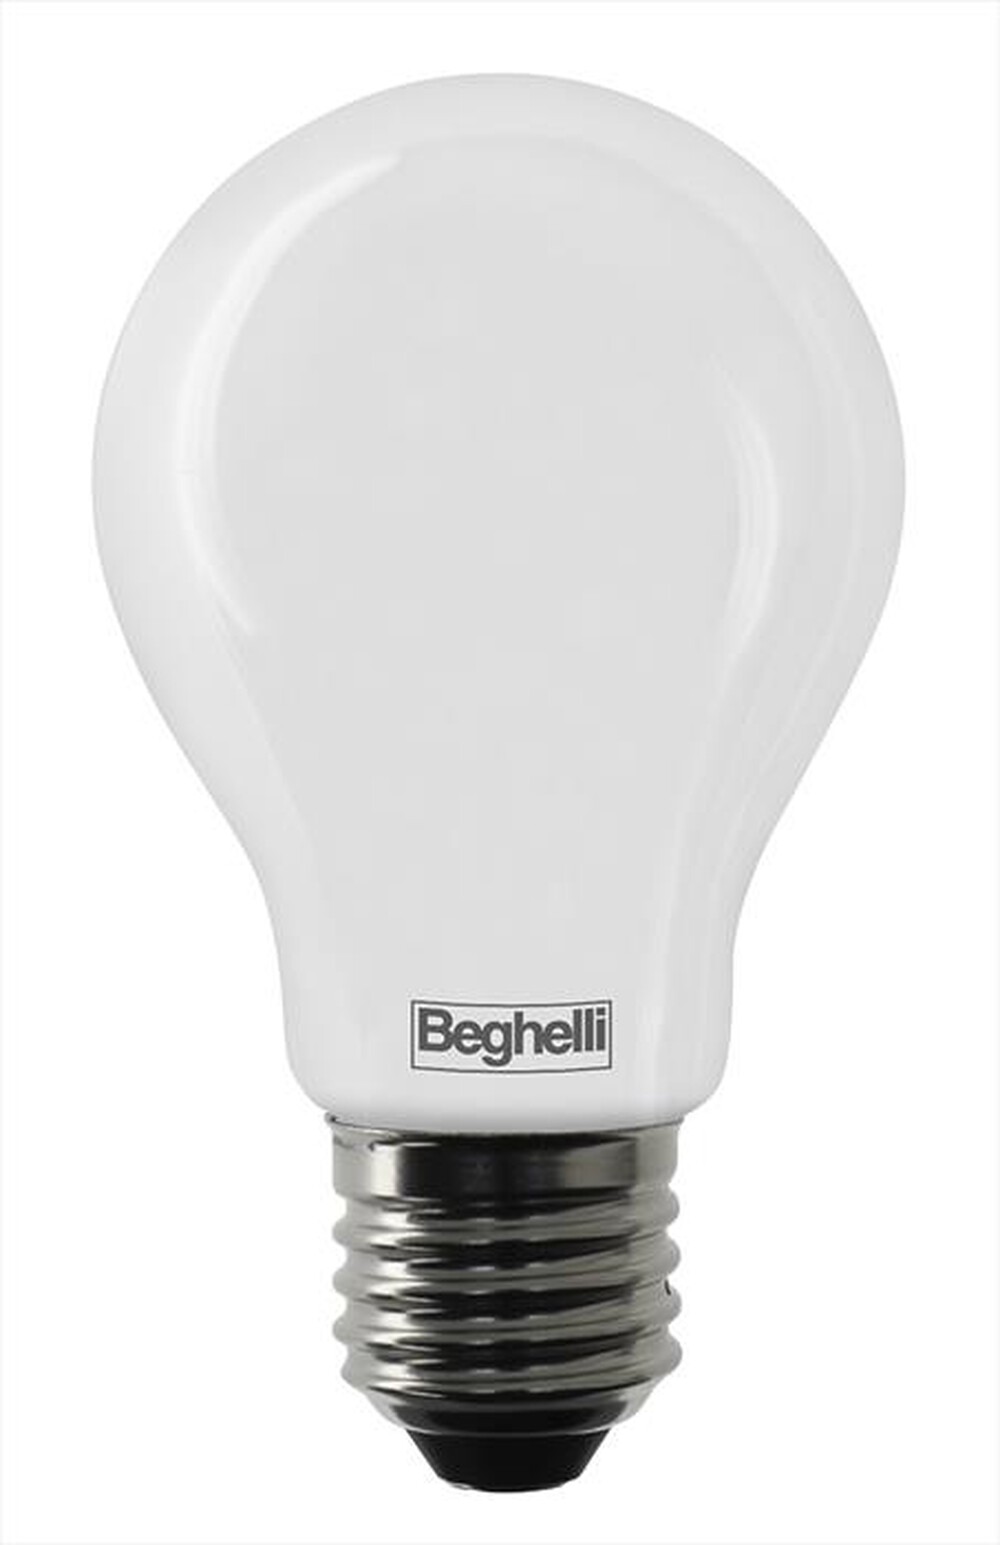 "BEGHELLI - TVETRO LED OP GOC 8W E27 4K BL-BIANCA"